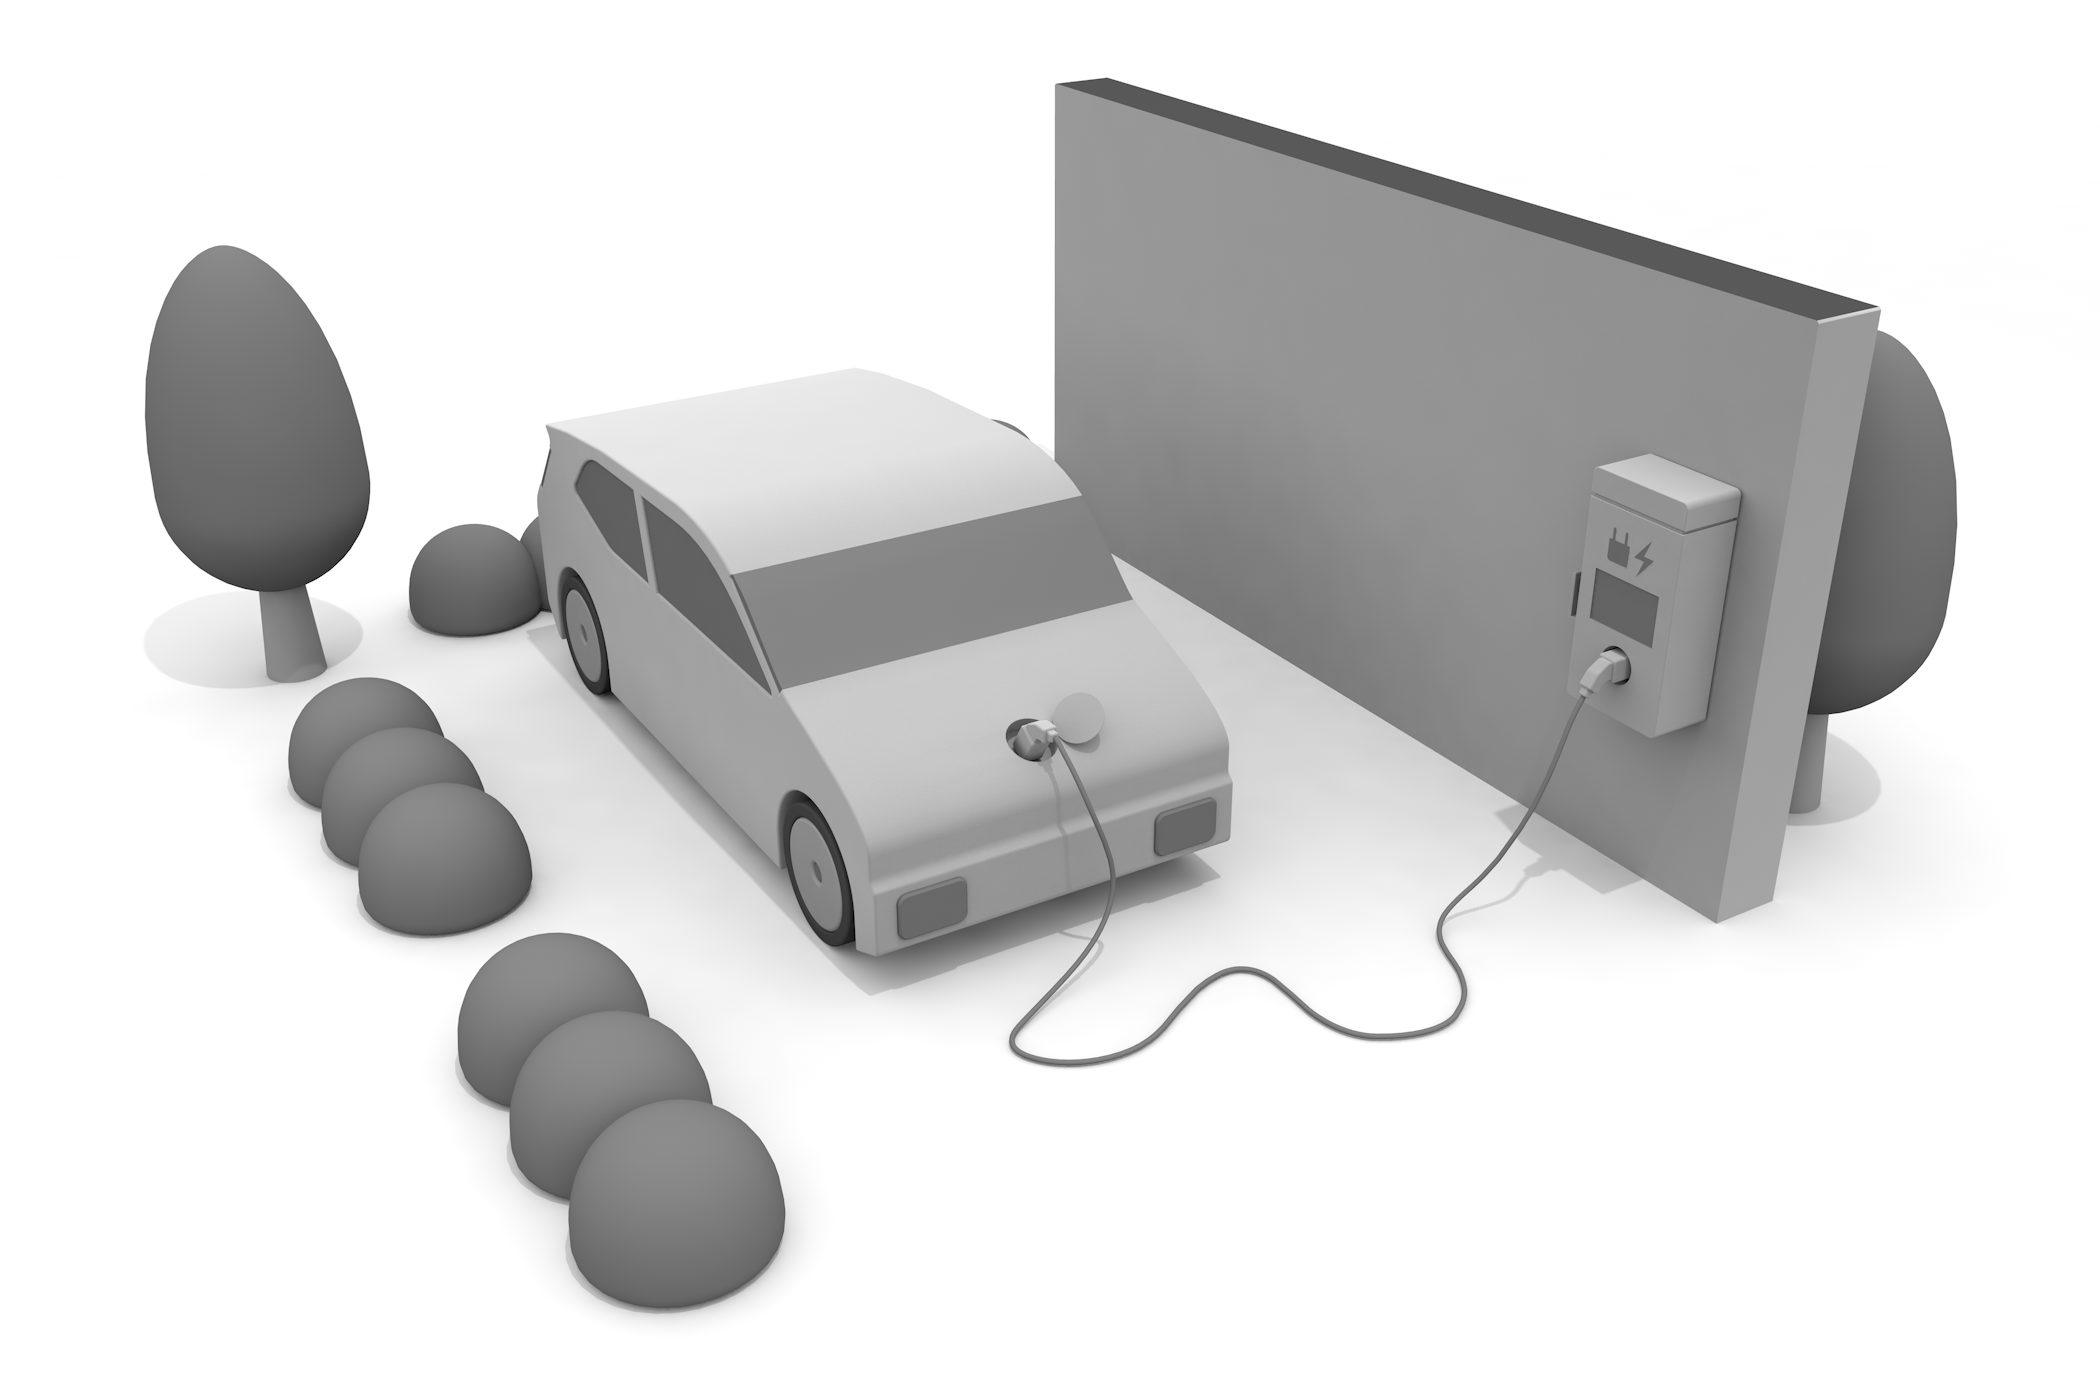 Transportation / Passenger Car / Vehicle / Design-Illustration / 3D Rendering / Free Material / Commercial Use OK